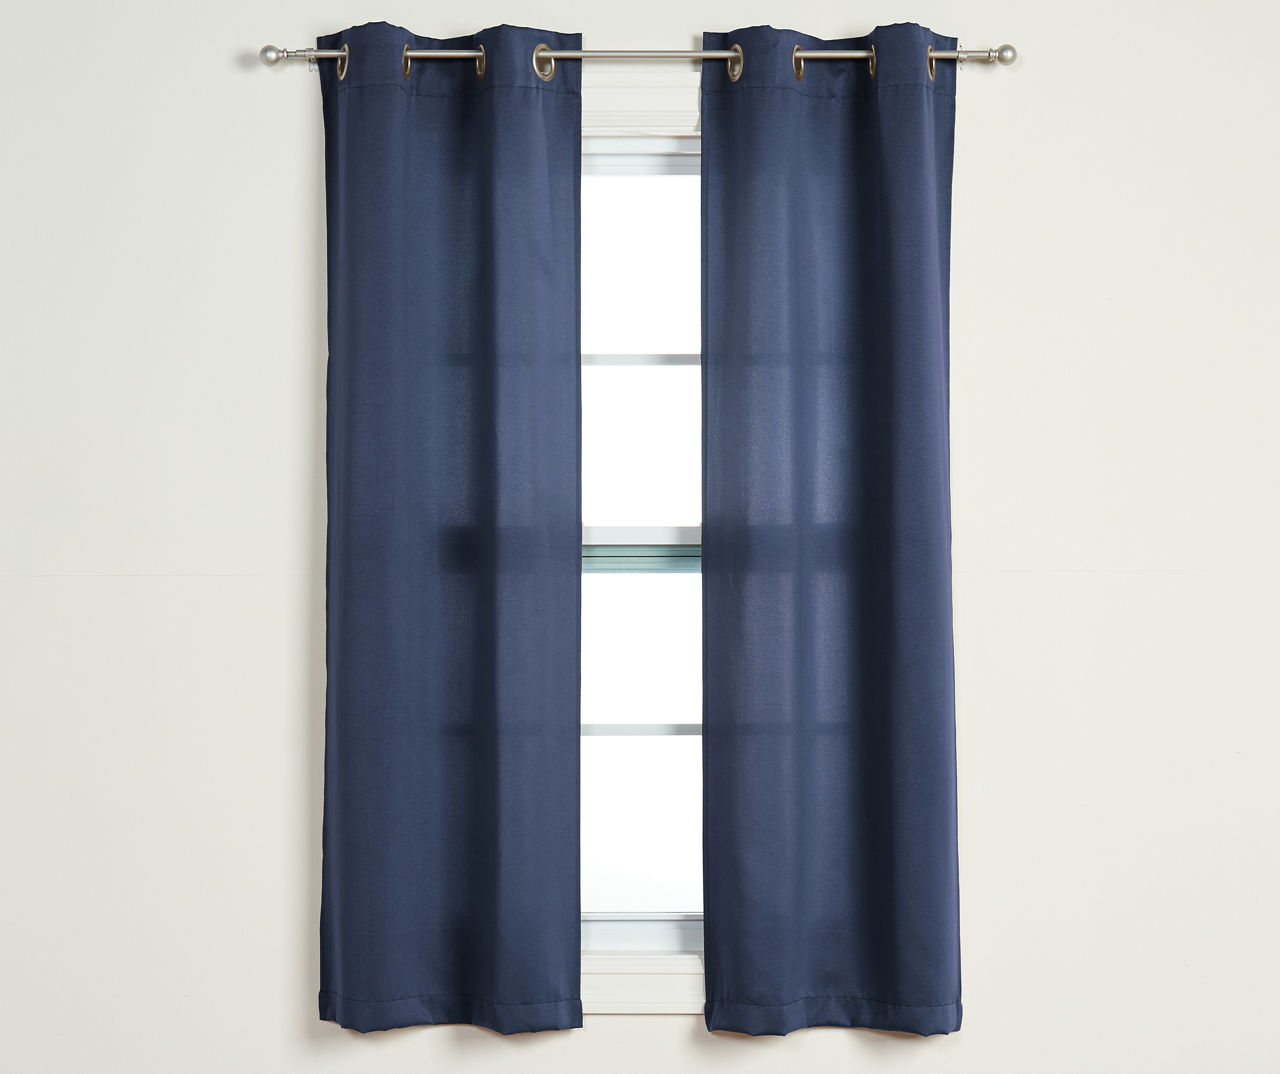 4-Piece Putnam Navy Room-Darkening Curtain Panels Set, (63")